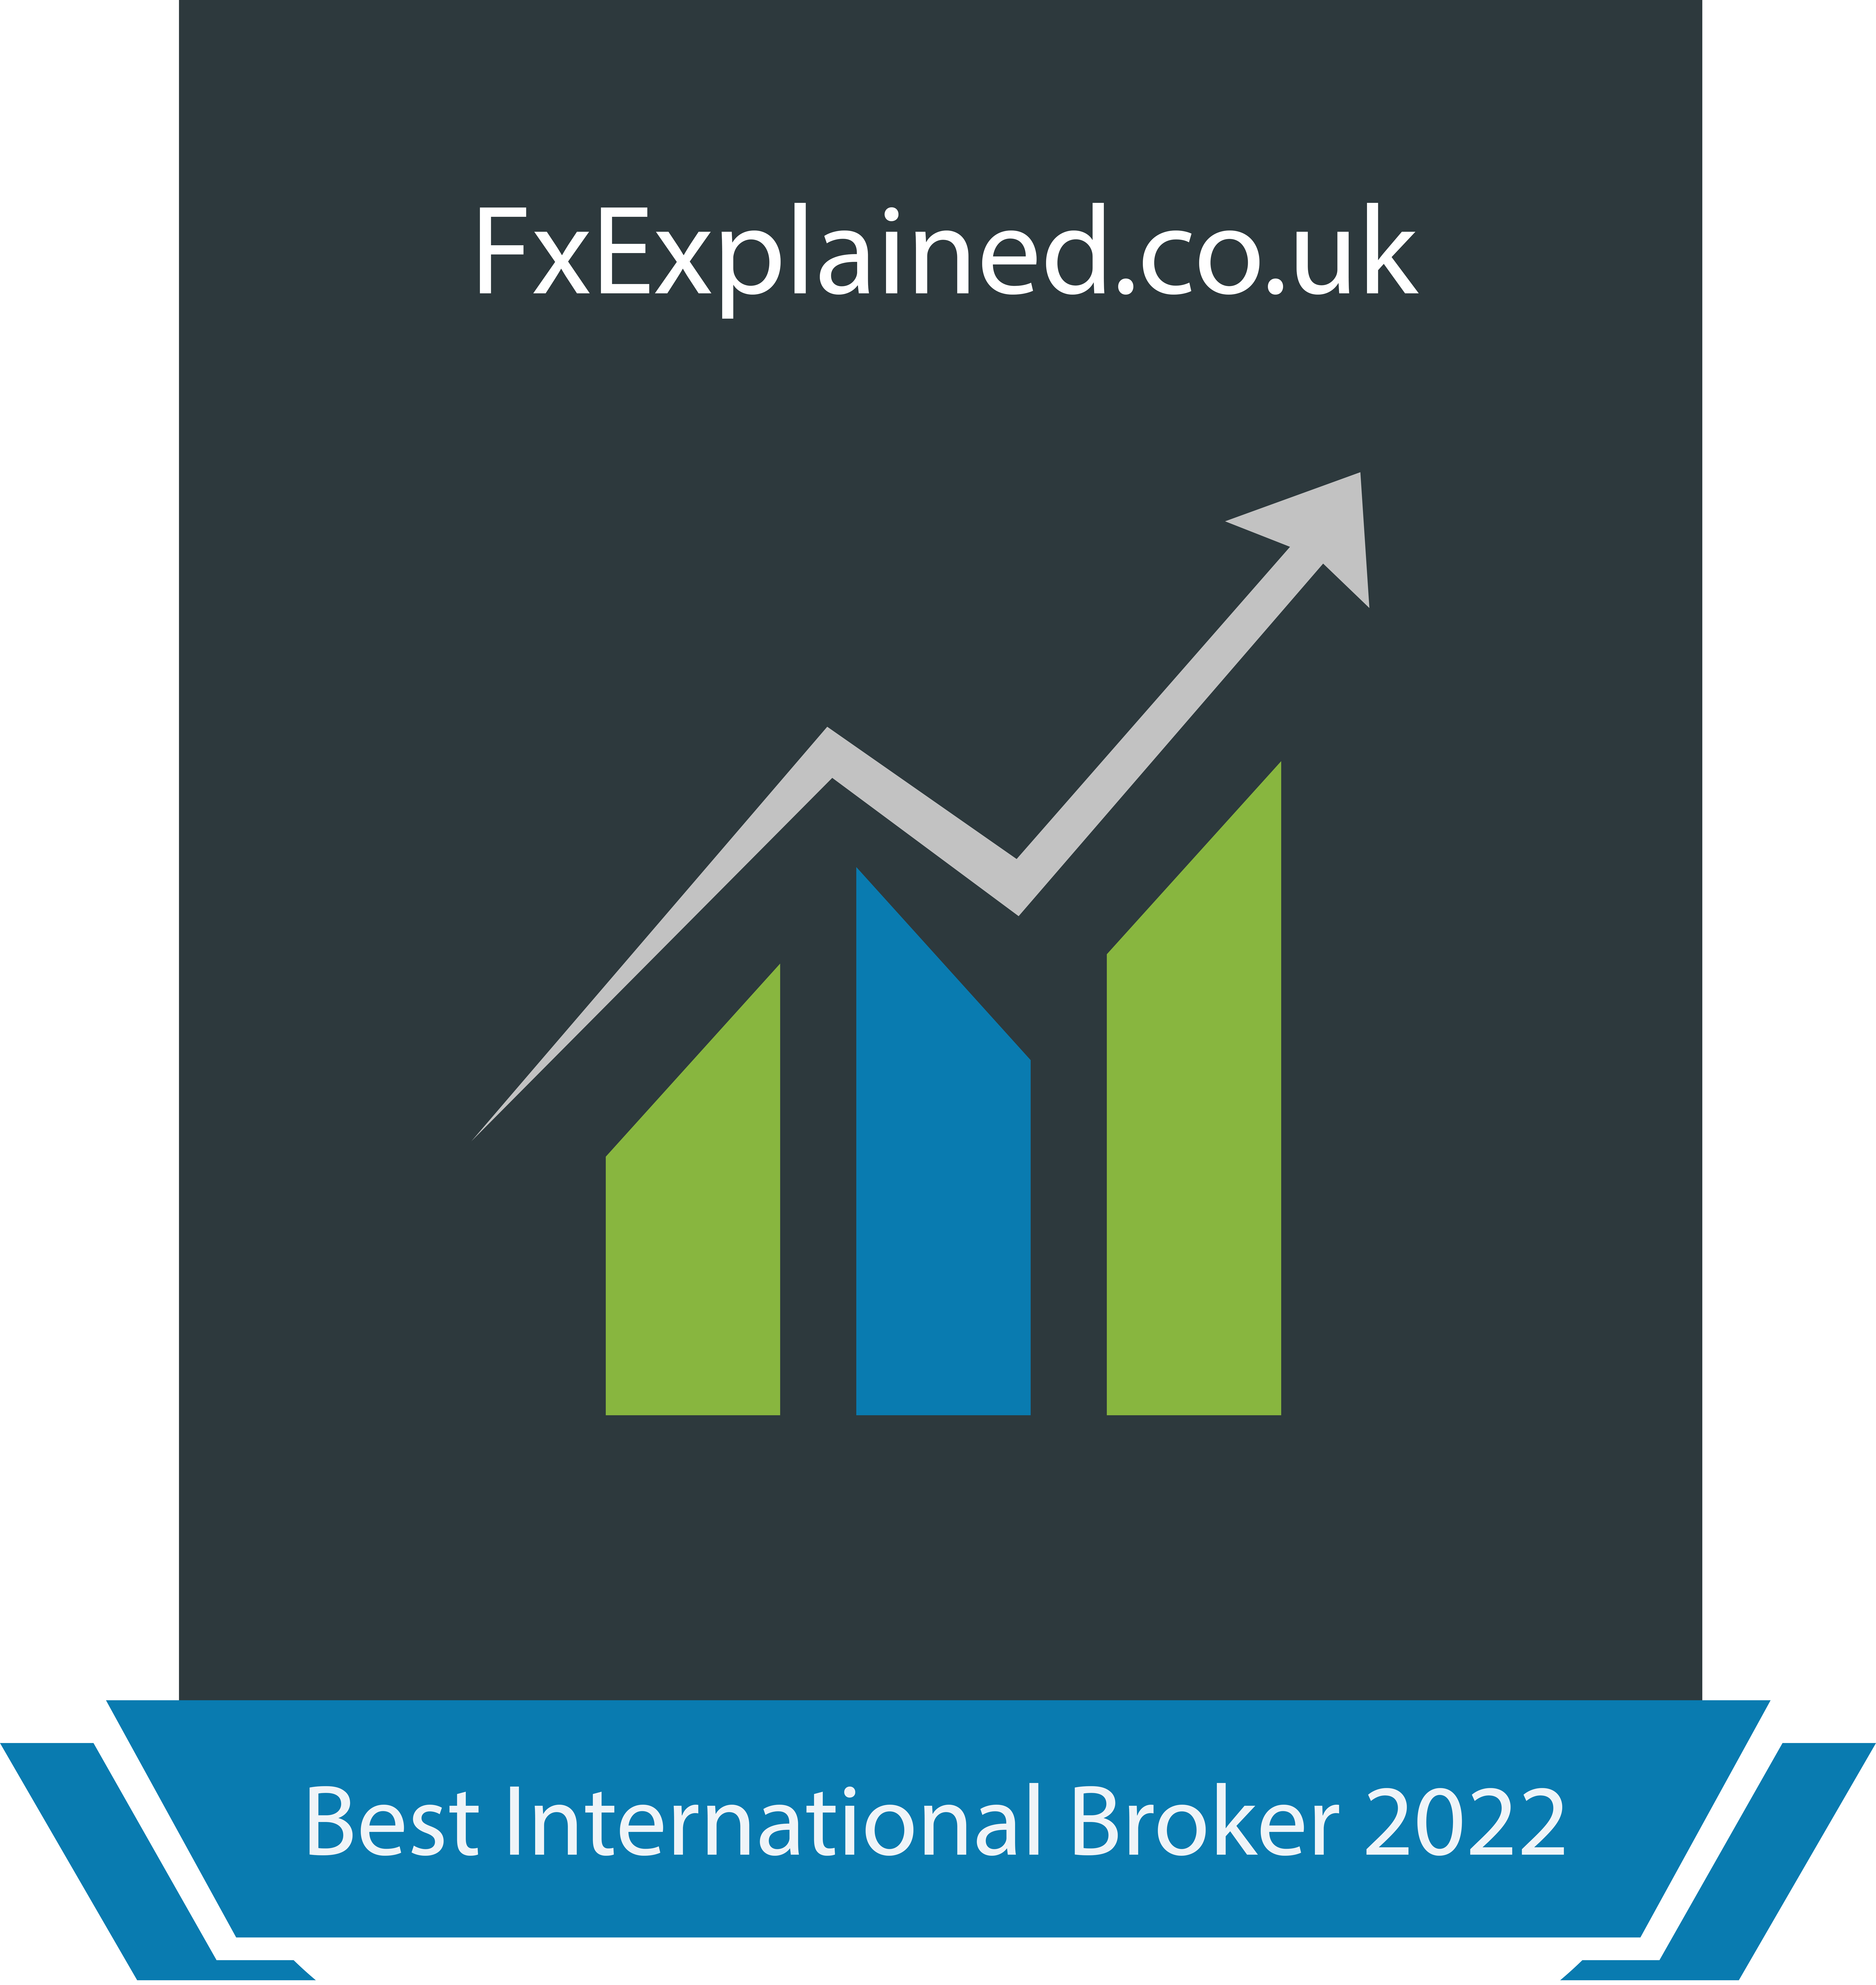 Best International Broker 2020